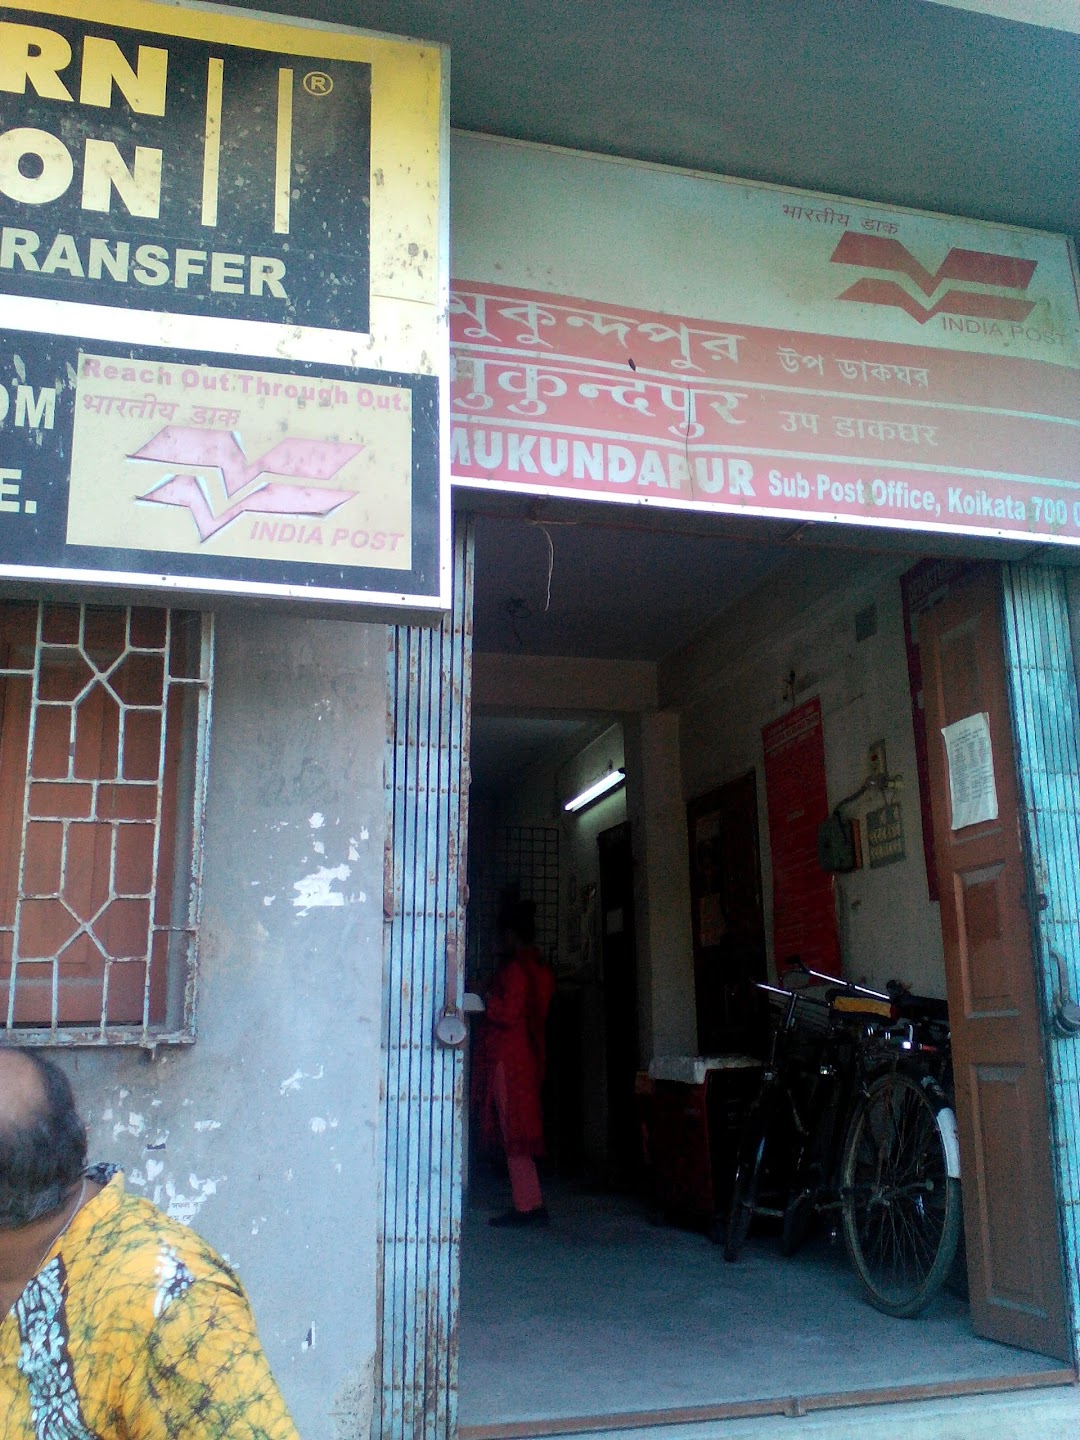 Mukundapur Sub Post Office